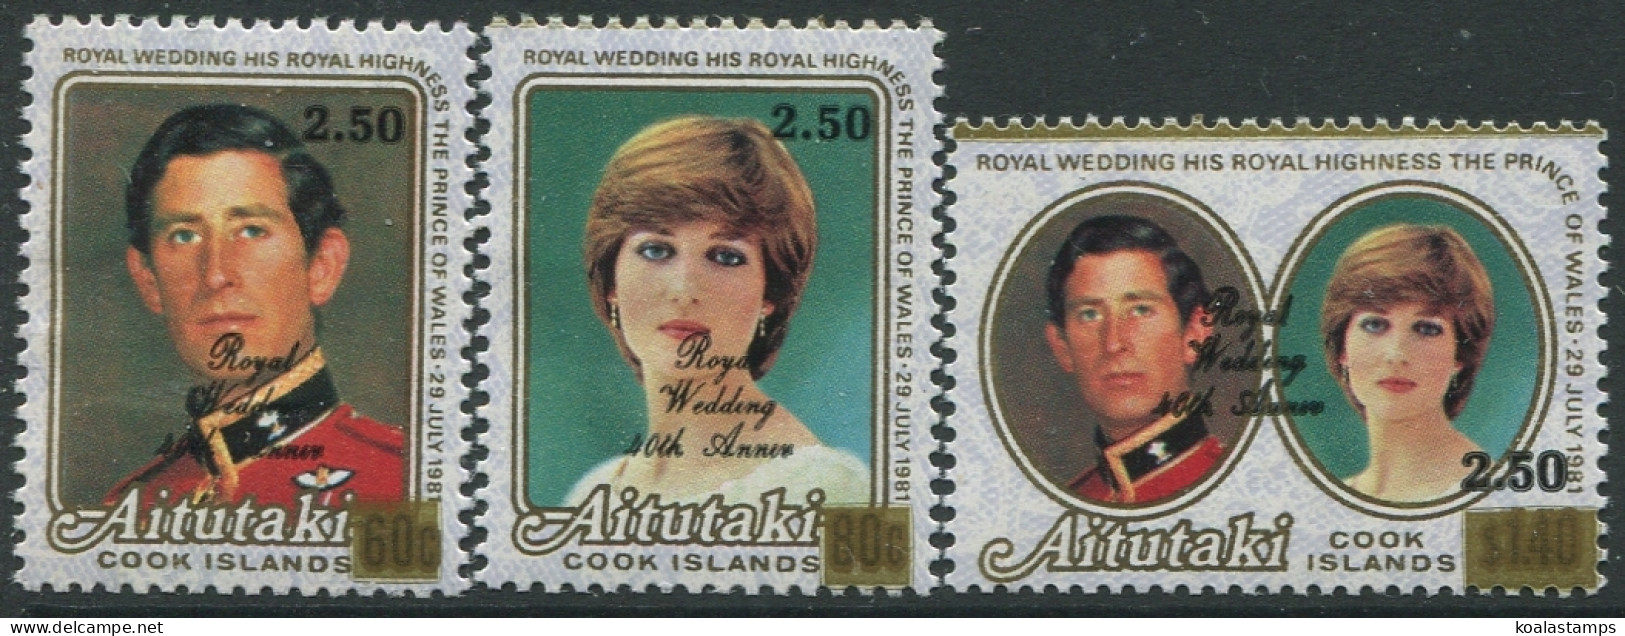 Aitutaki 1987 SG572-574 Royal Ruby Wedding Ovpts Set MNH - Cook Islands